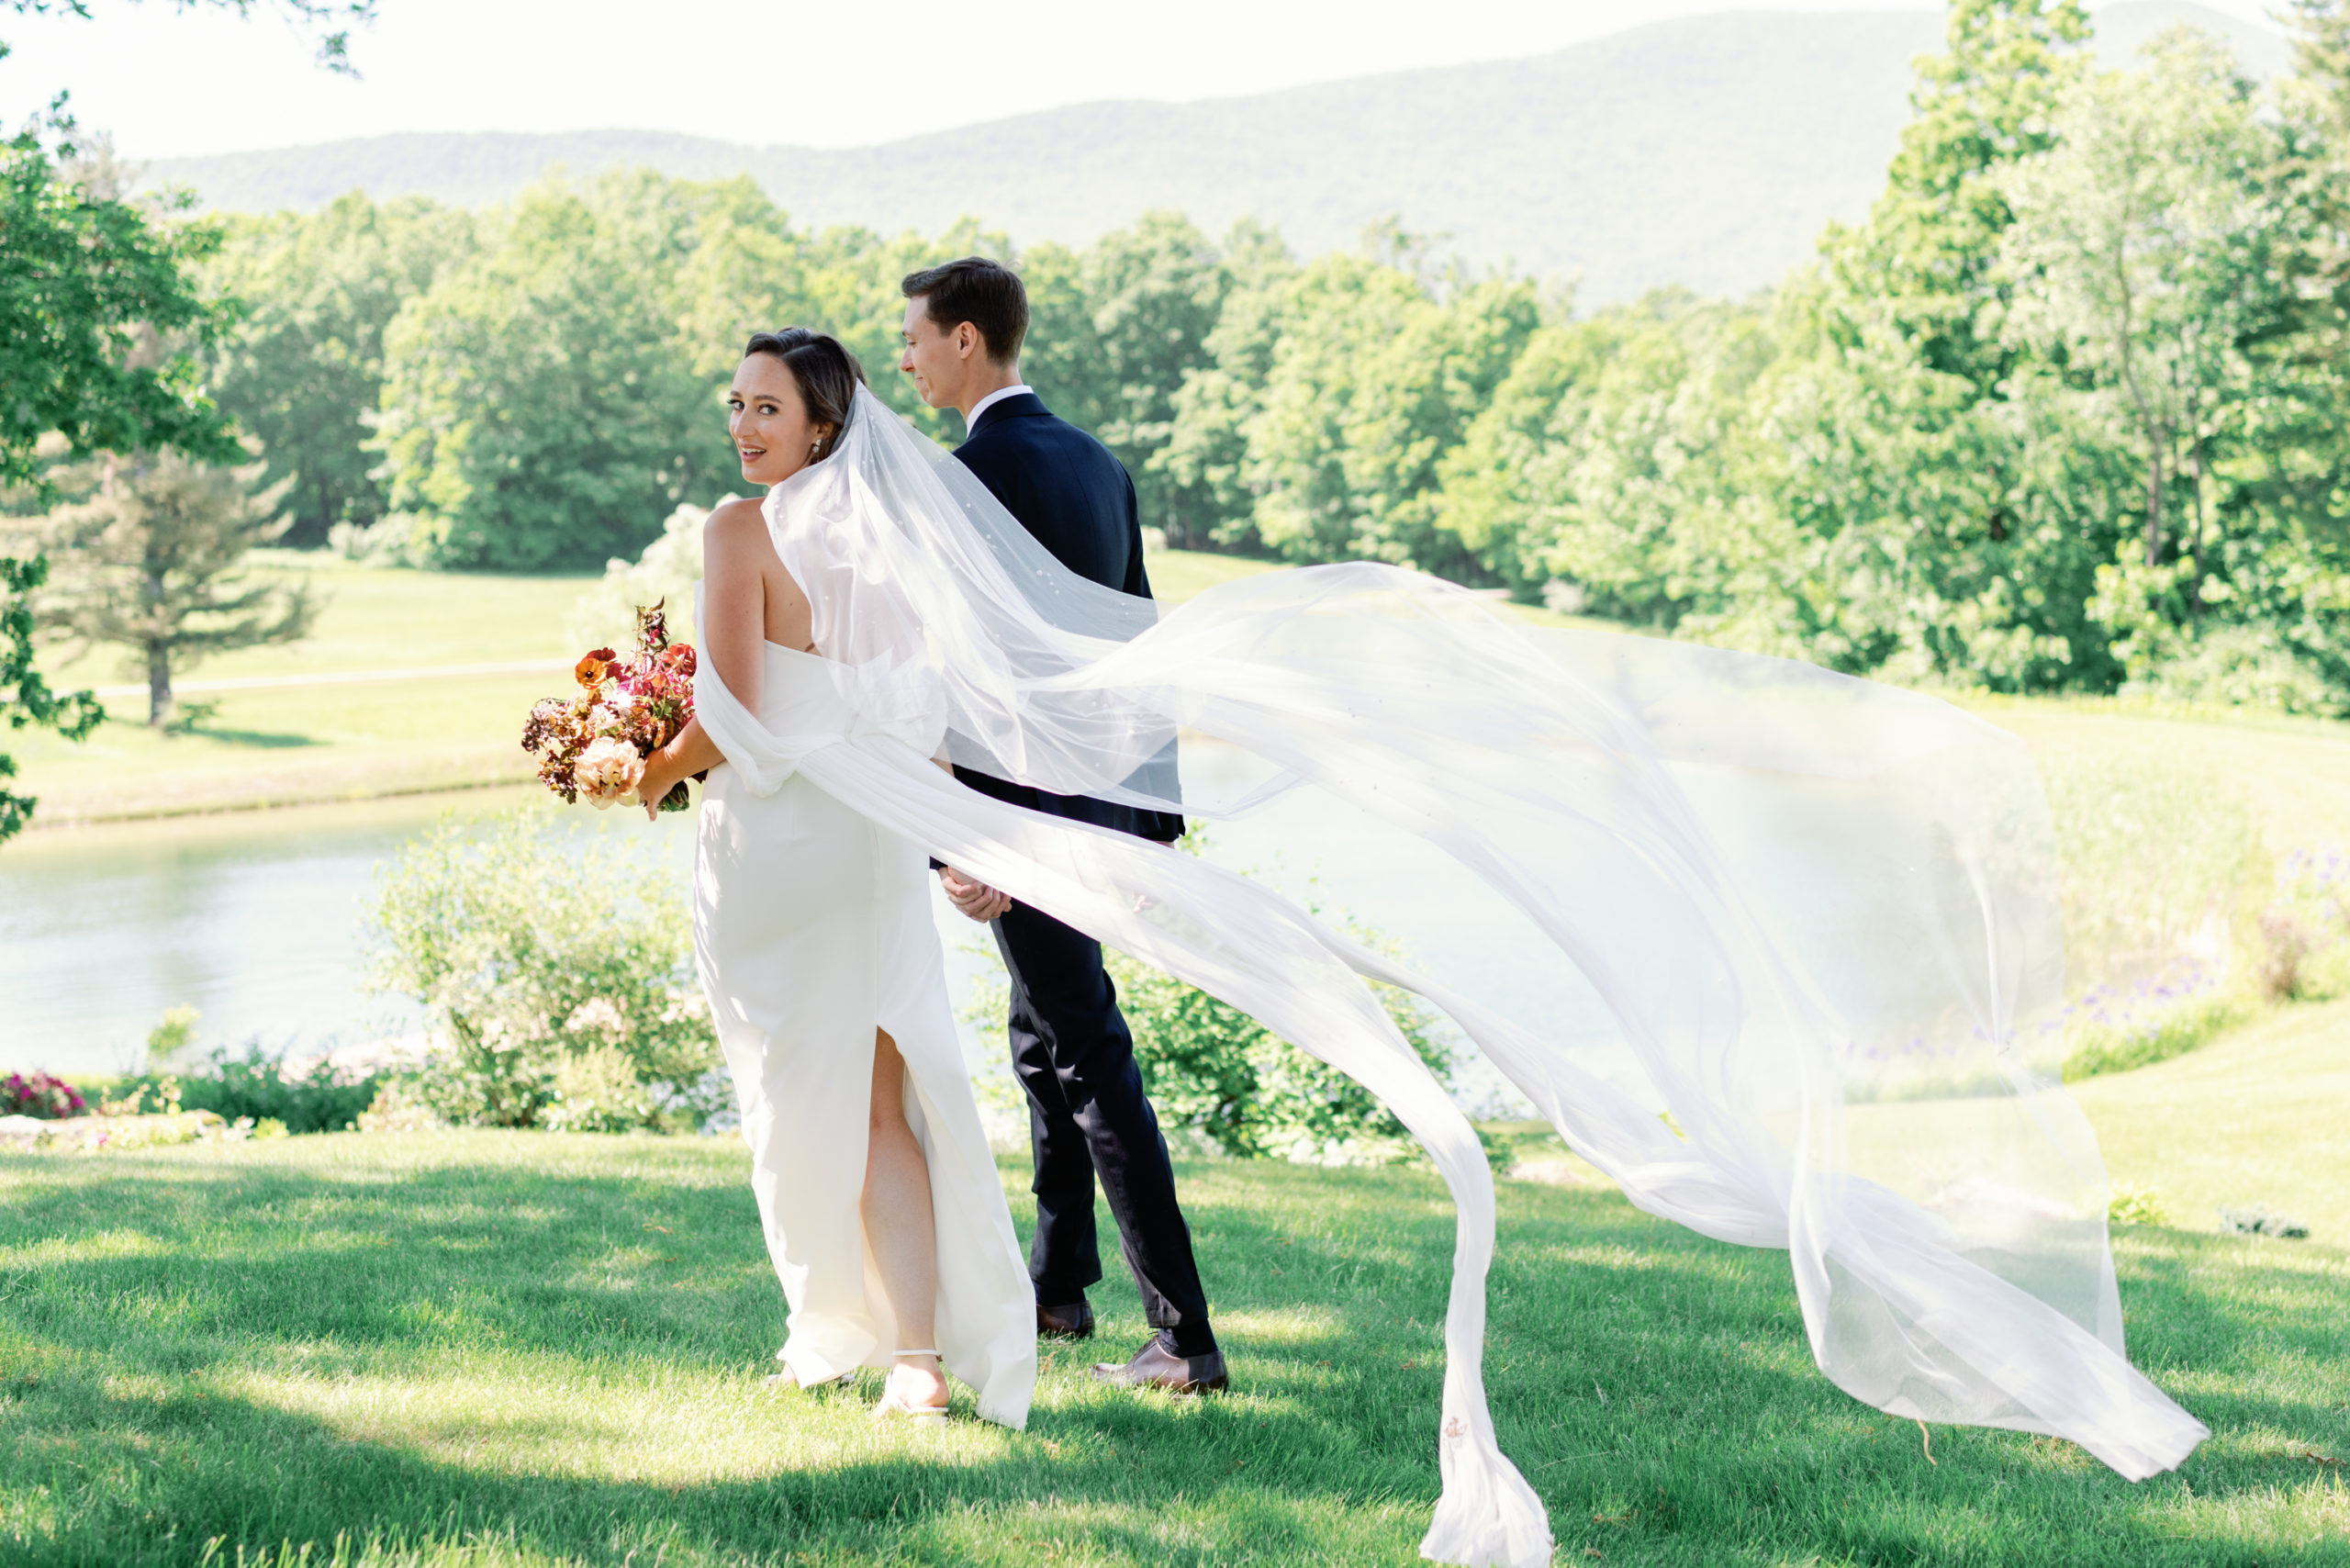 sarah seven sandra gown bride walks with wind billowing veil